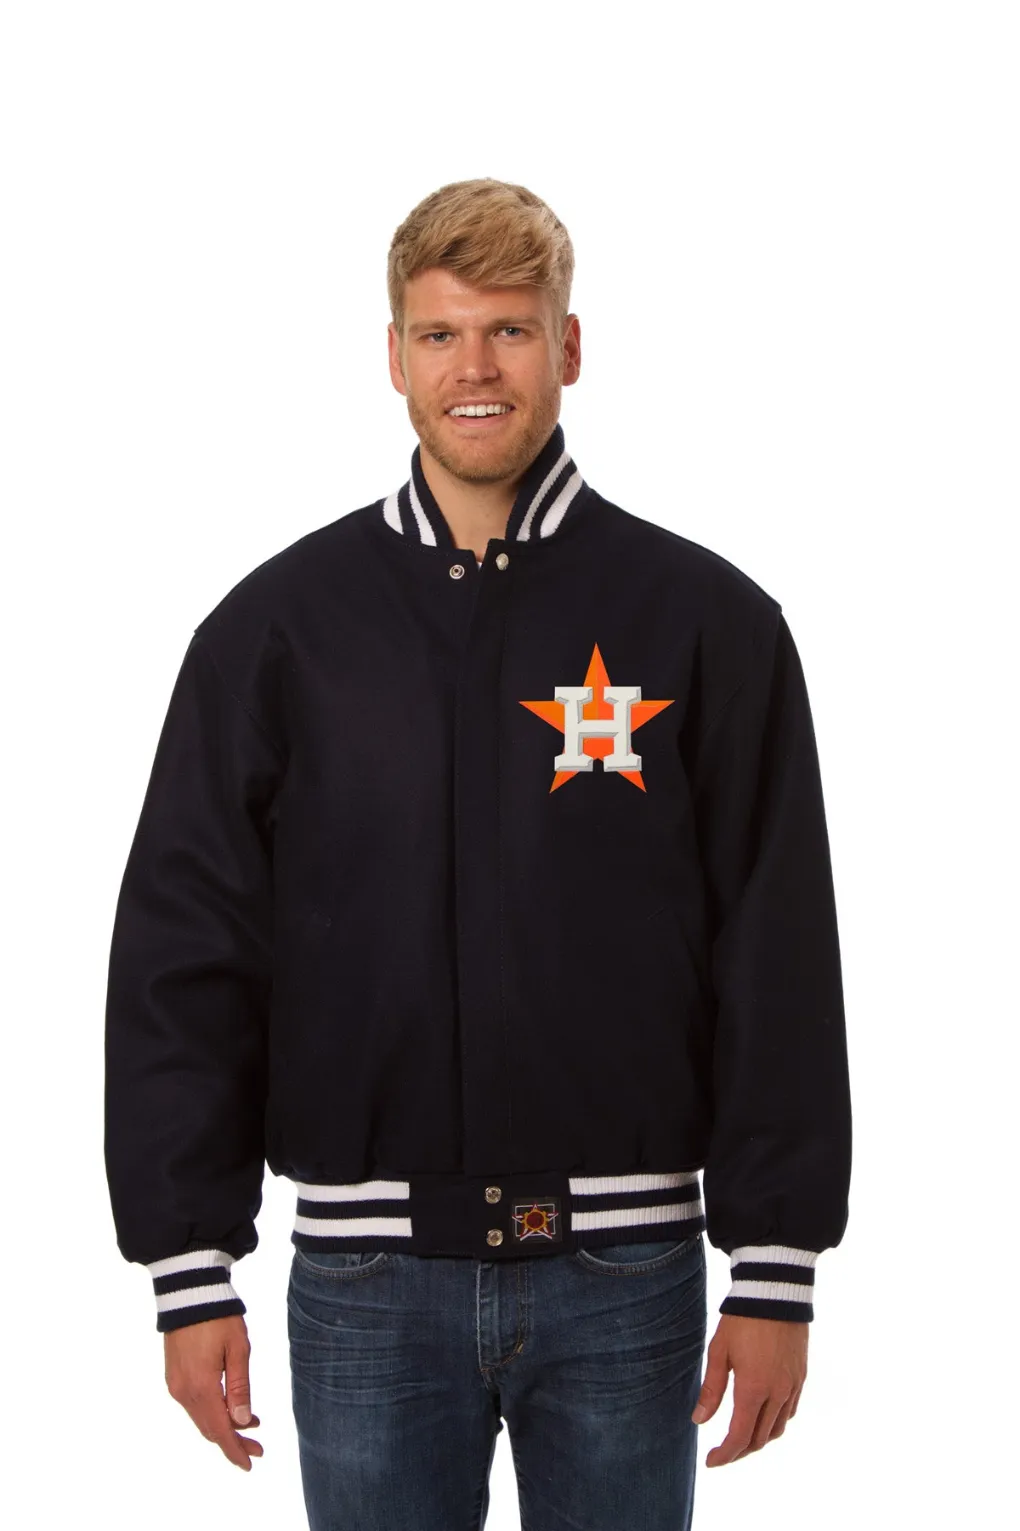 Black Friday Deals on Houston Astros Merchandise, Astros